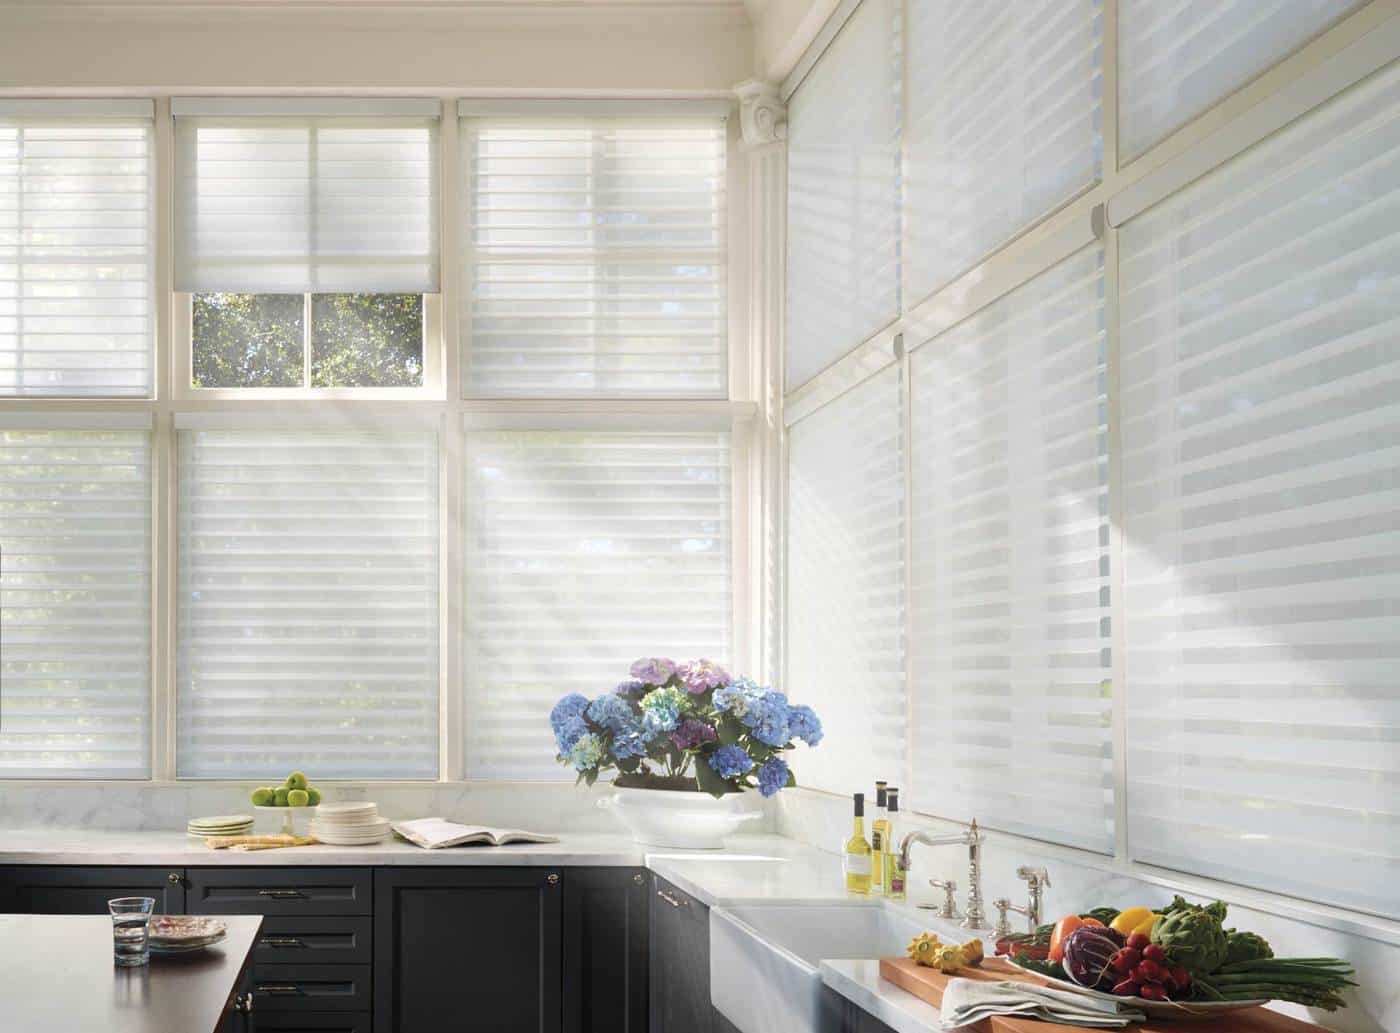 Luxurious kitchen after installing custom window shades